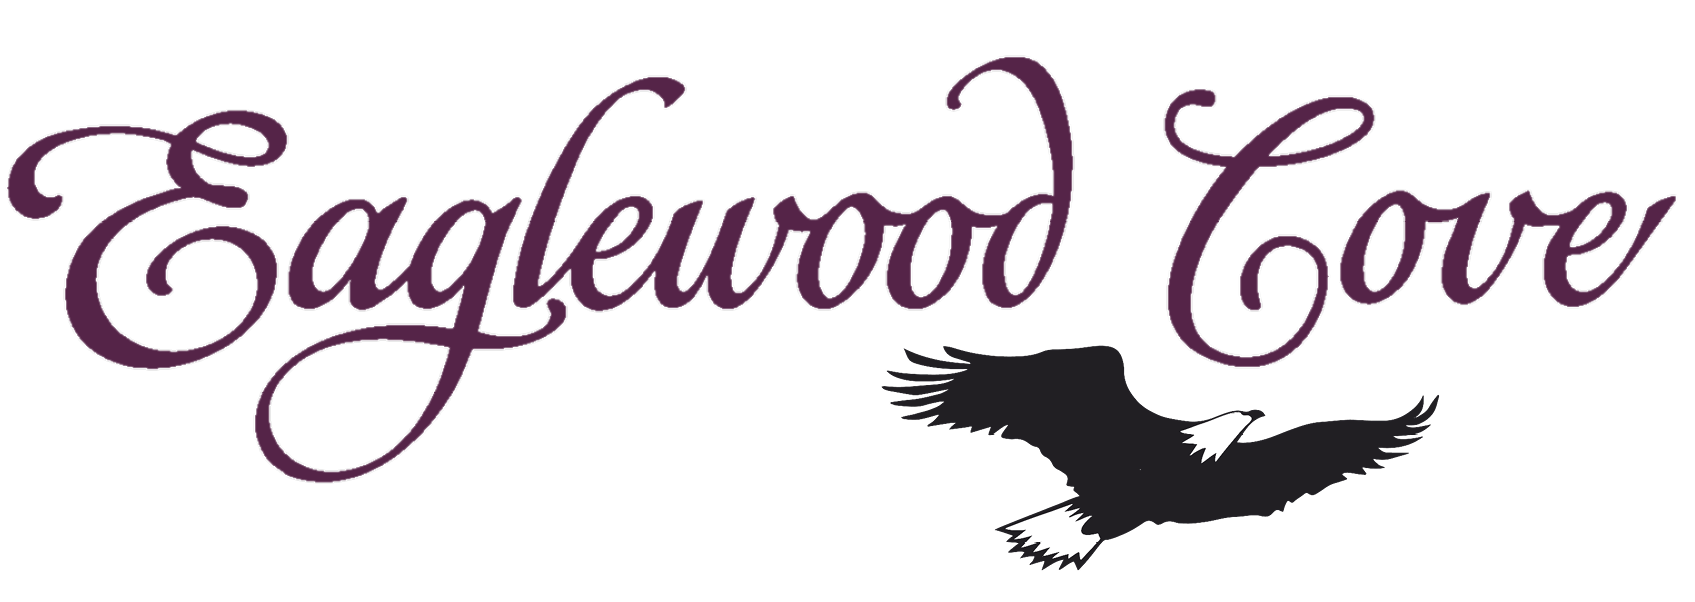 Eaglewood Cove Logo